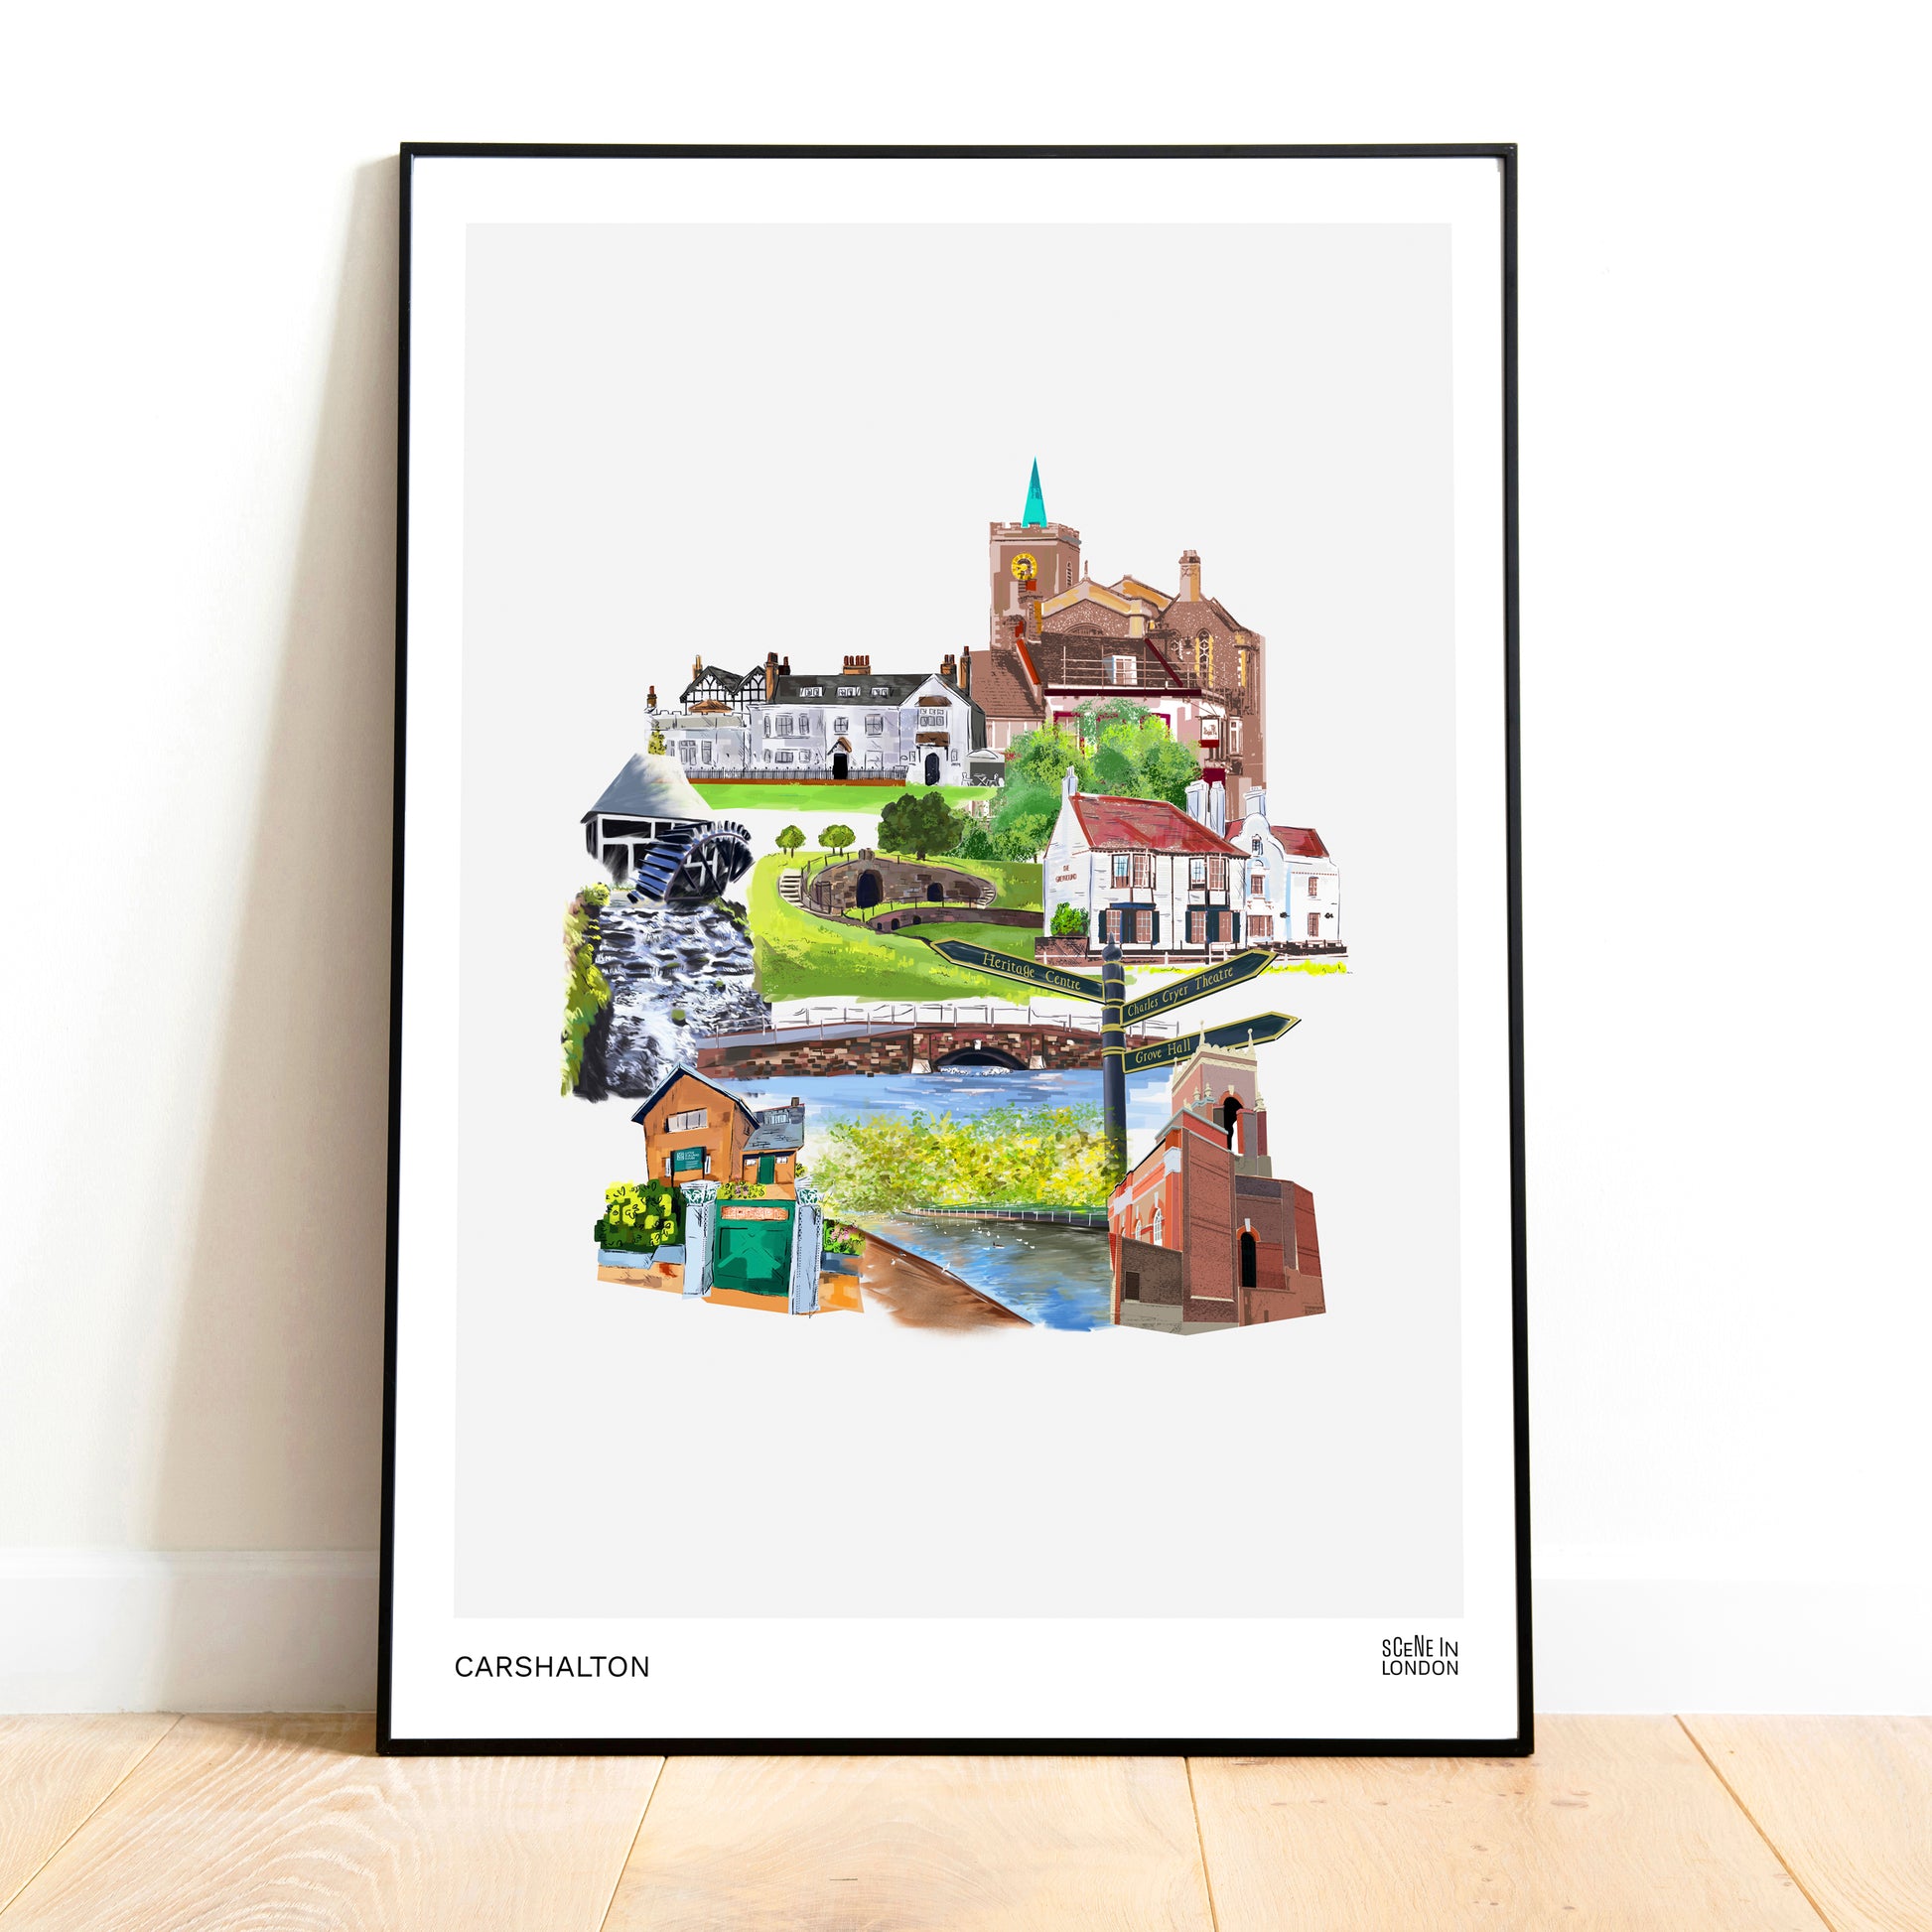 Carshalton print featuring landmarks in Carshalton